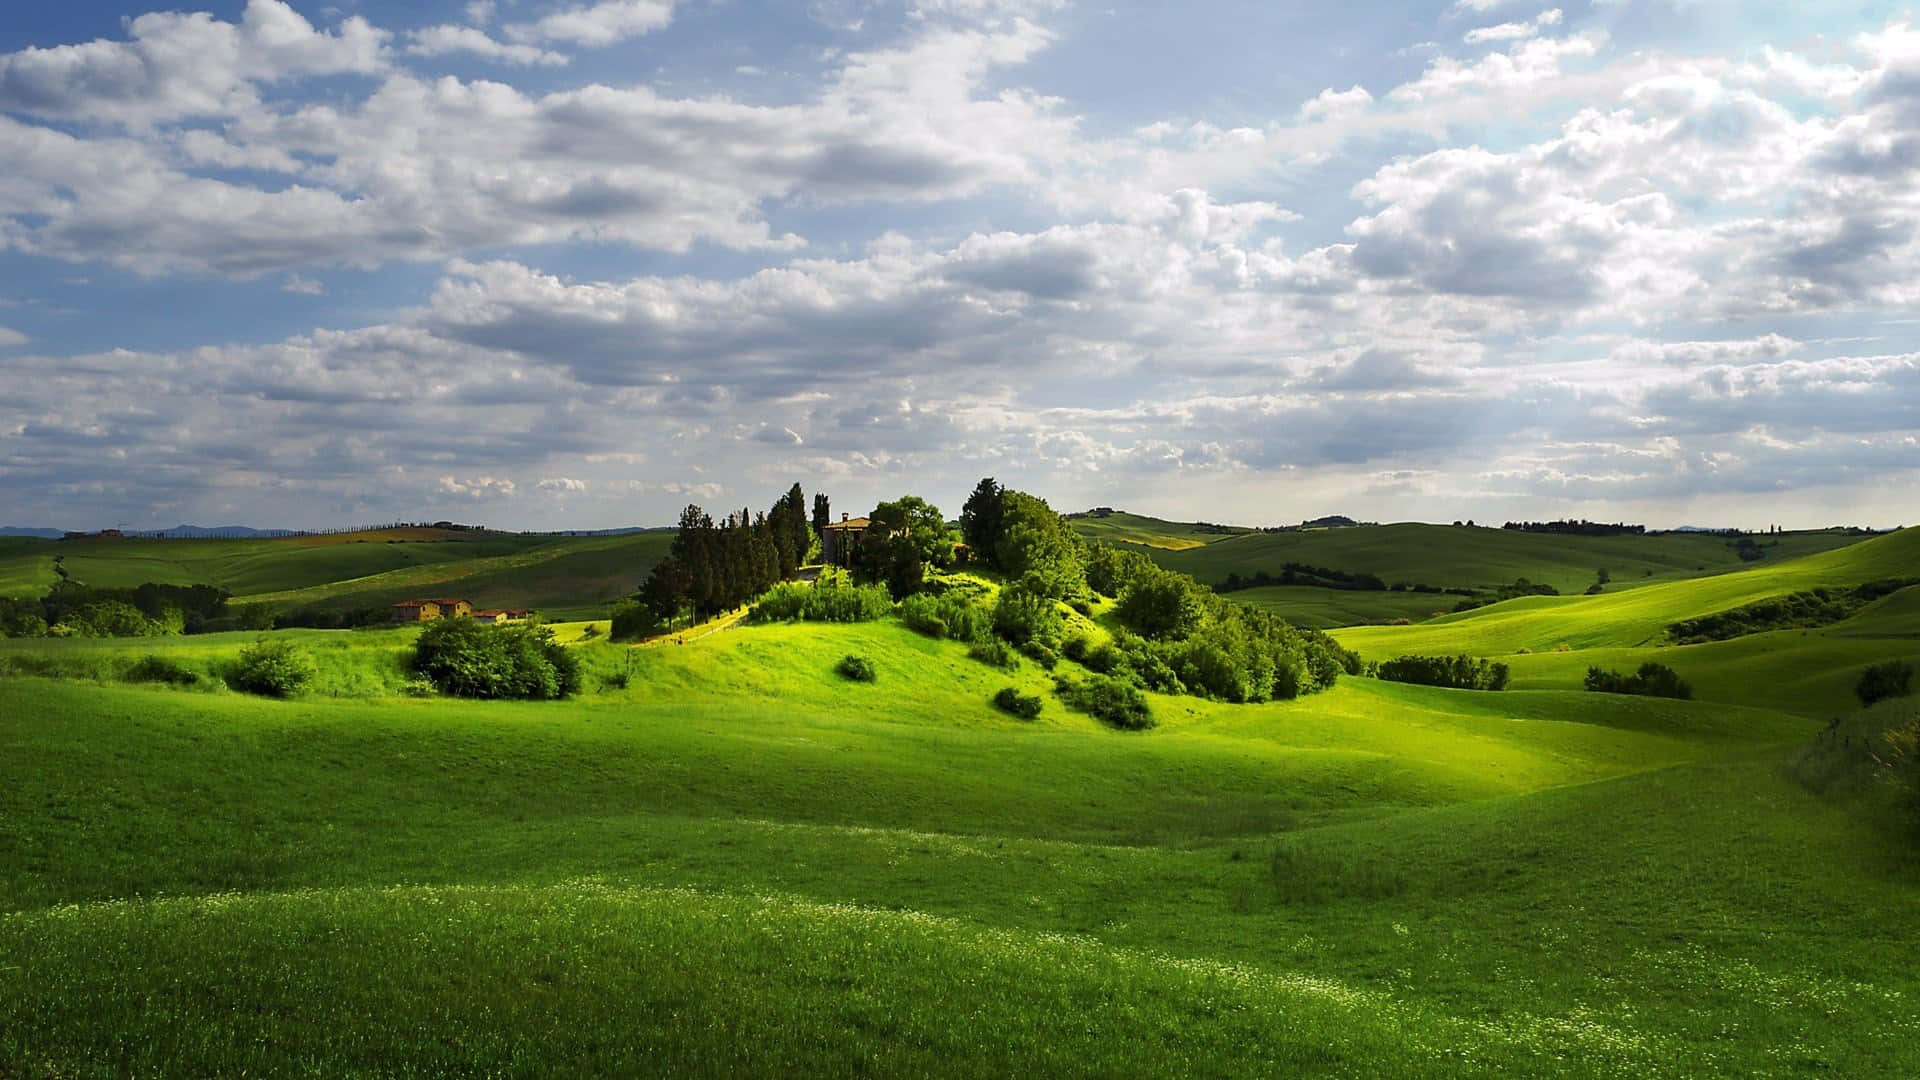 Rural Landscape with Grassy Fields